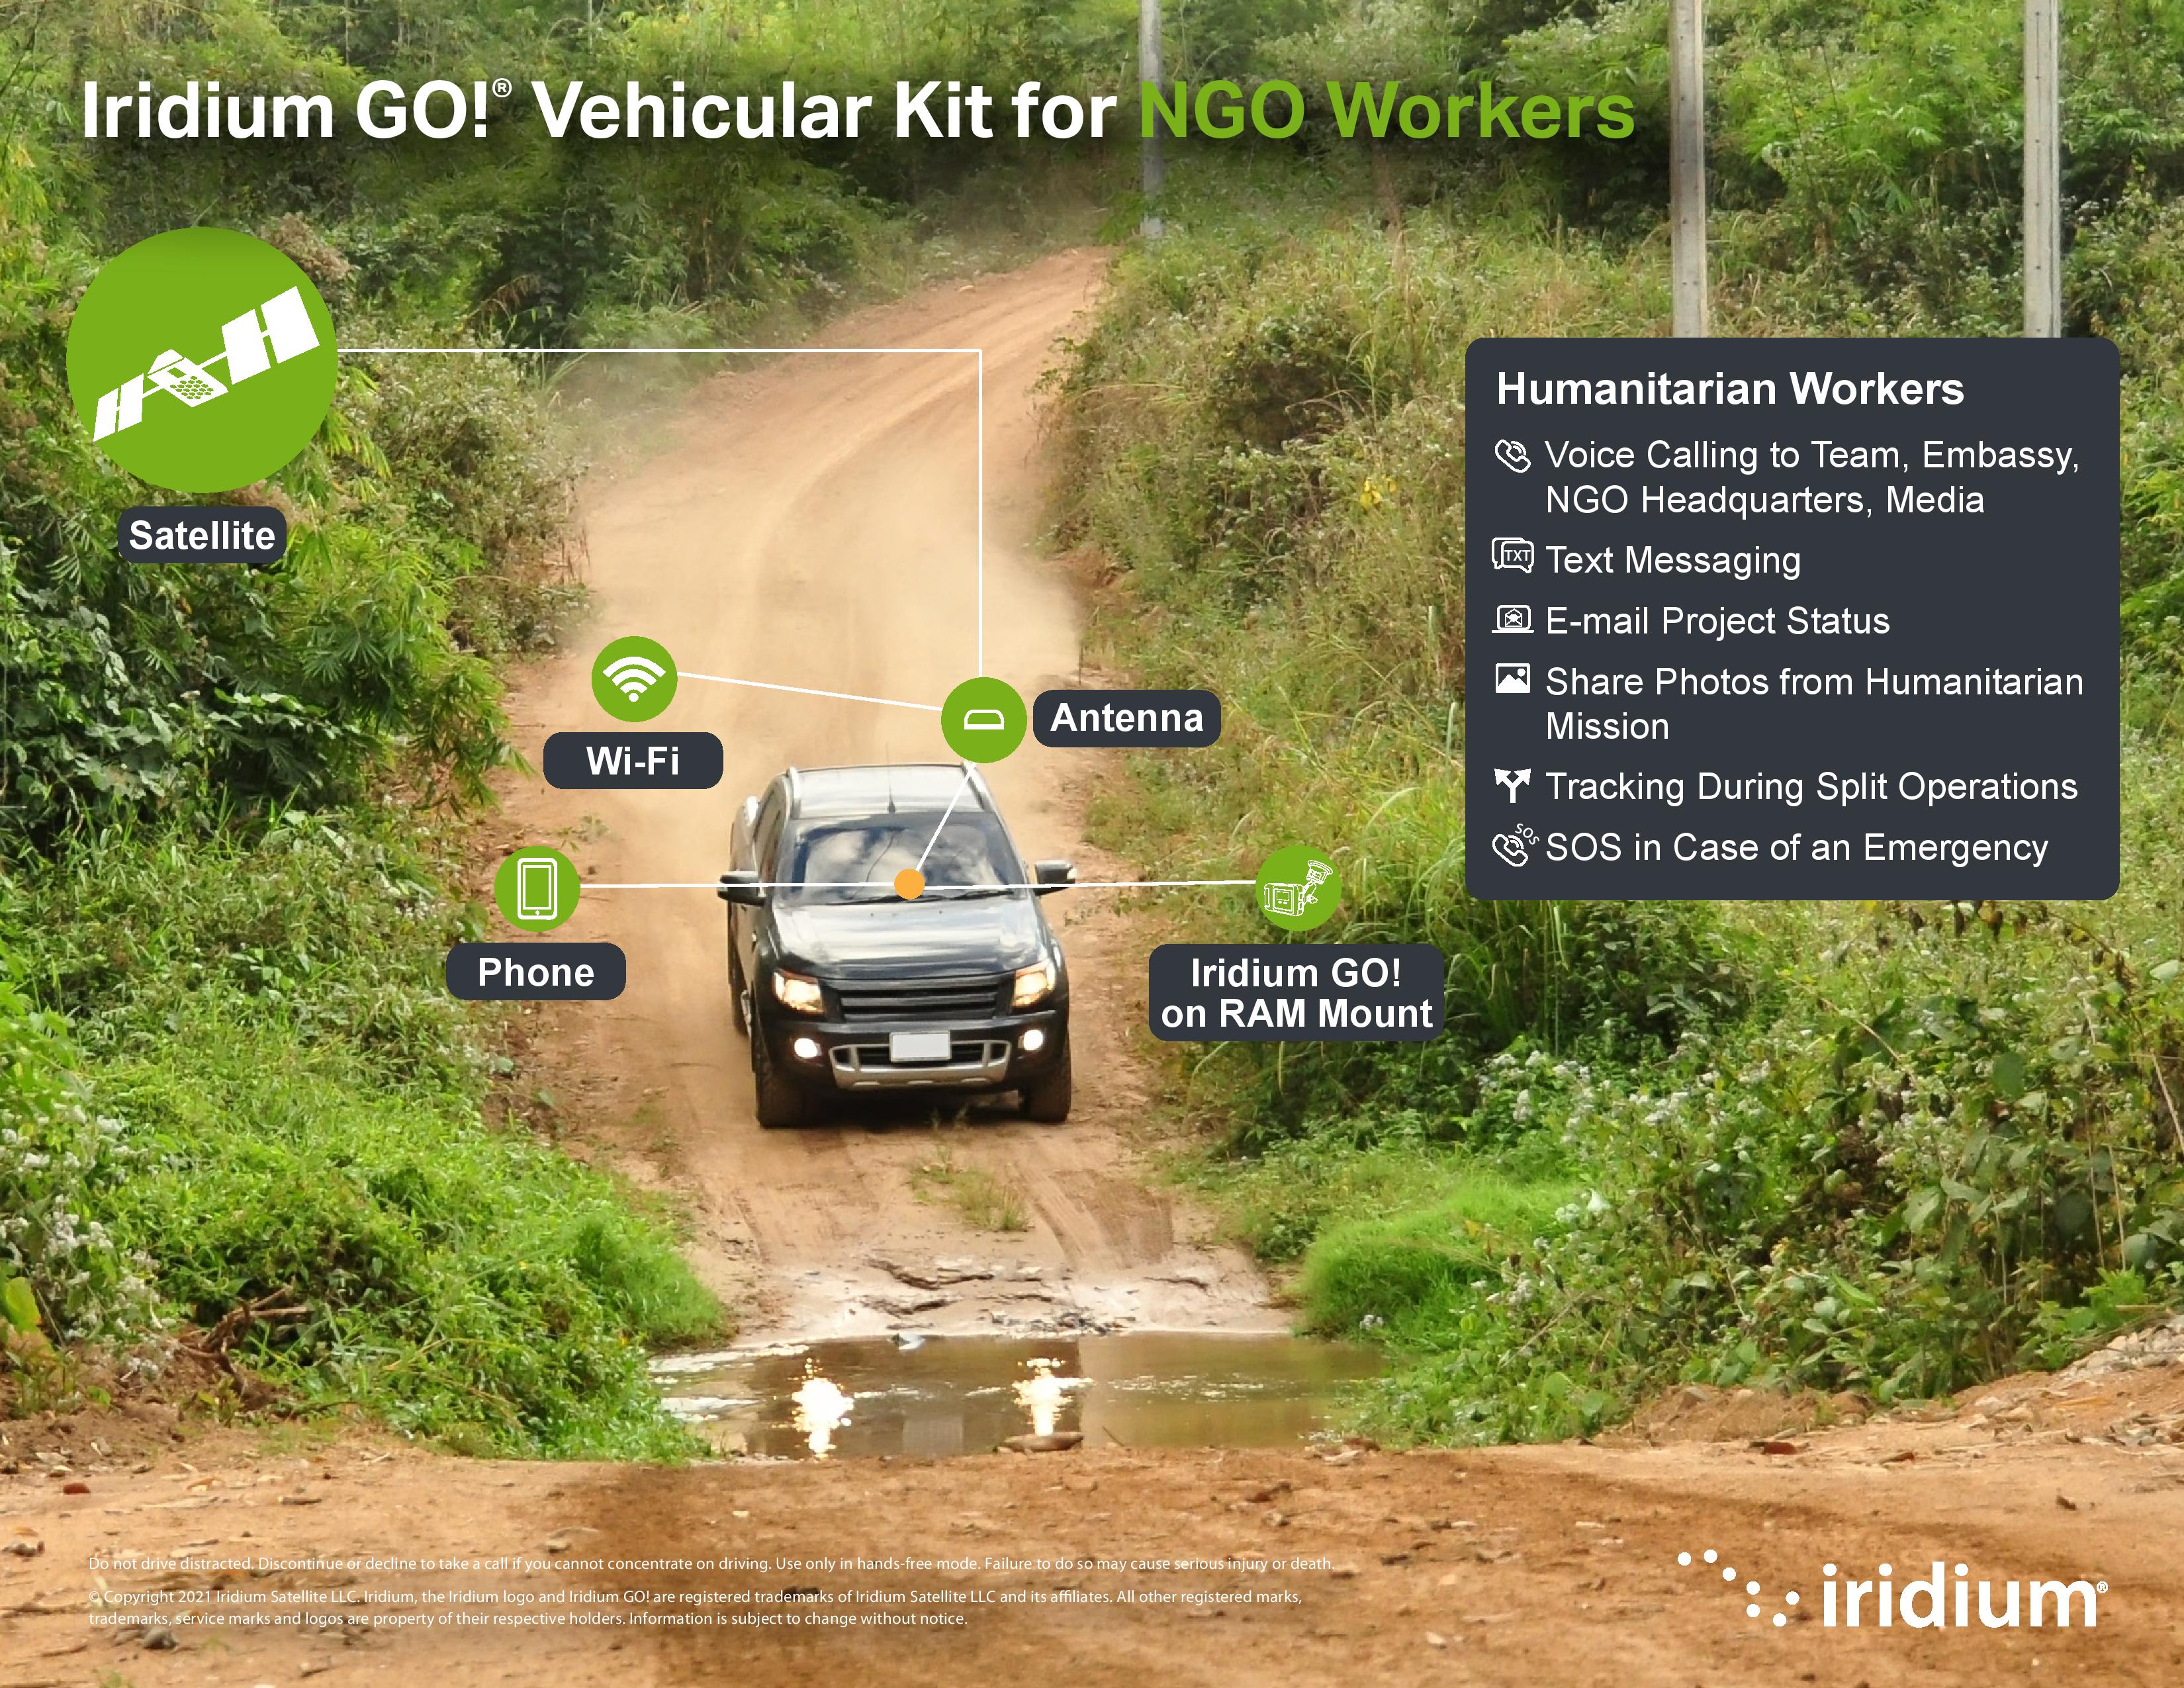 UC_Iridium_GO__Vehicular_Kit_Use_Cases_NGO_Workers_APR21-page-001.jpg